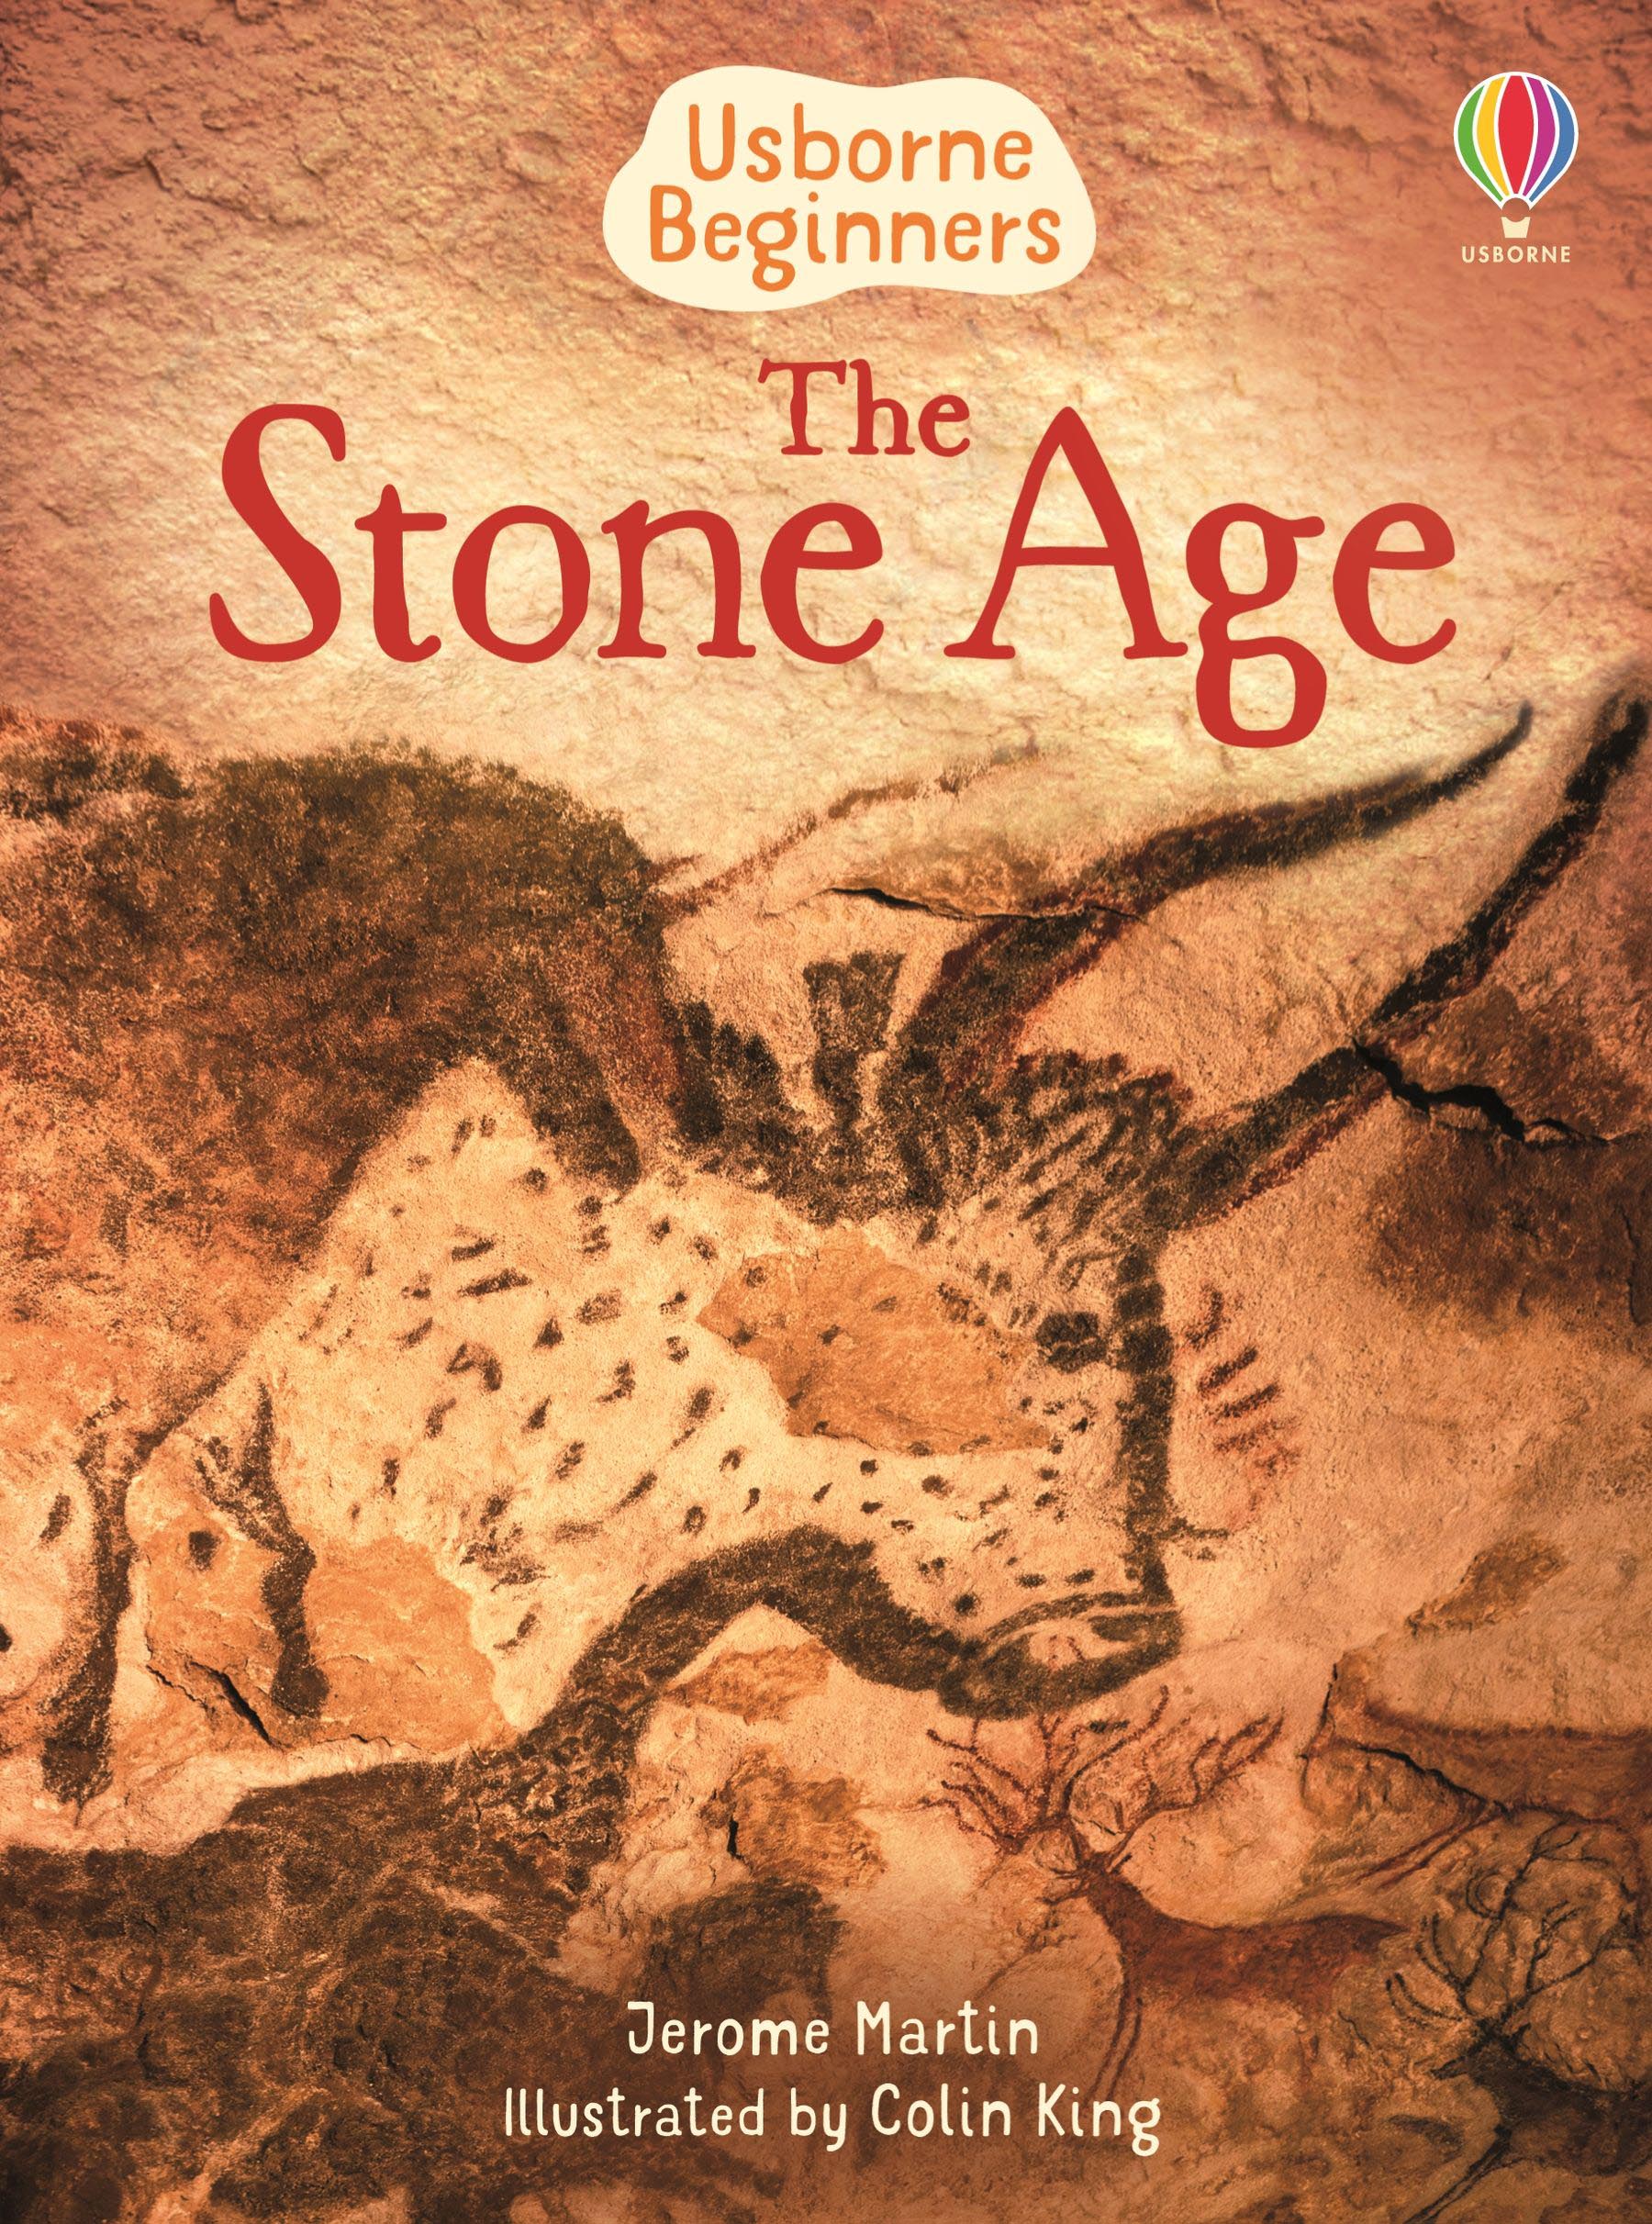 Usborne Beginners The Stone Age